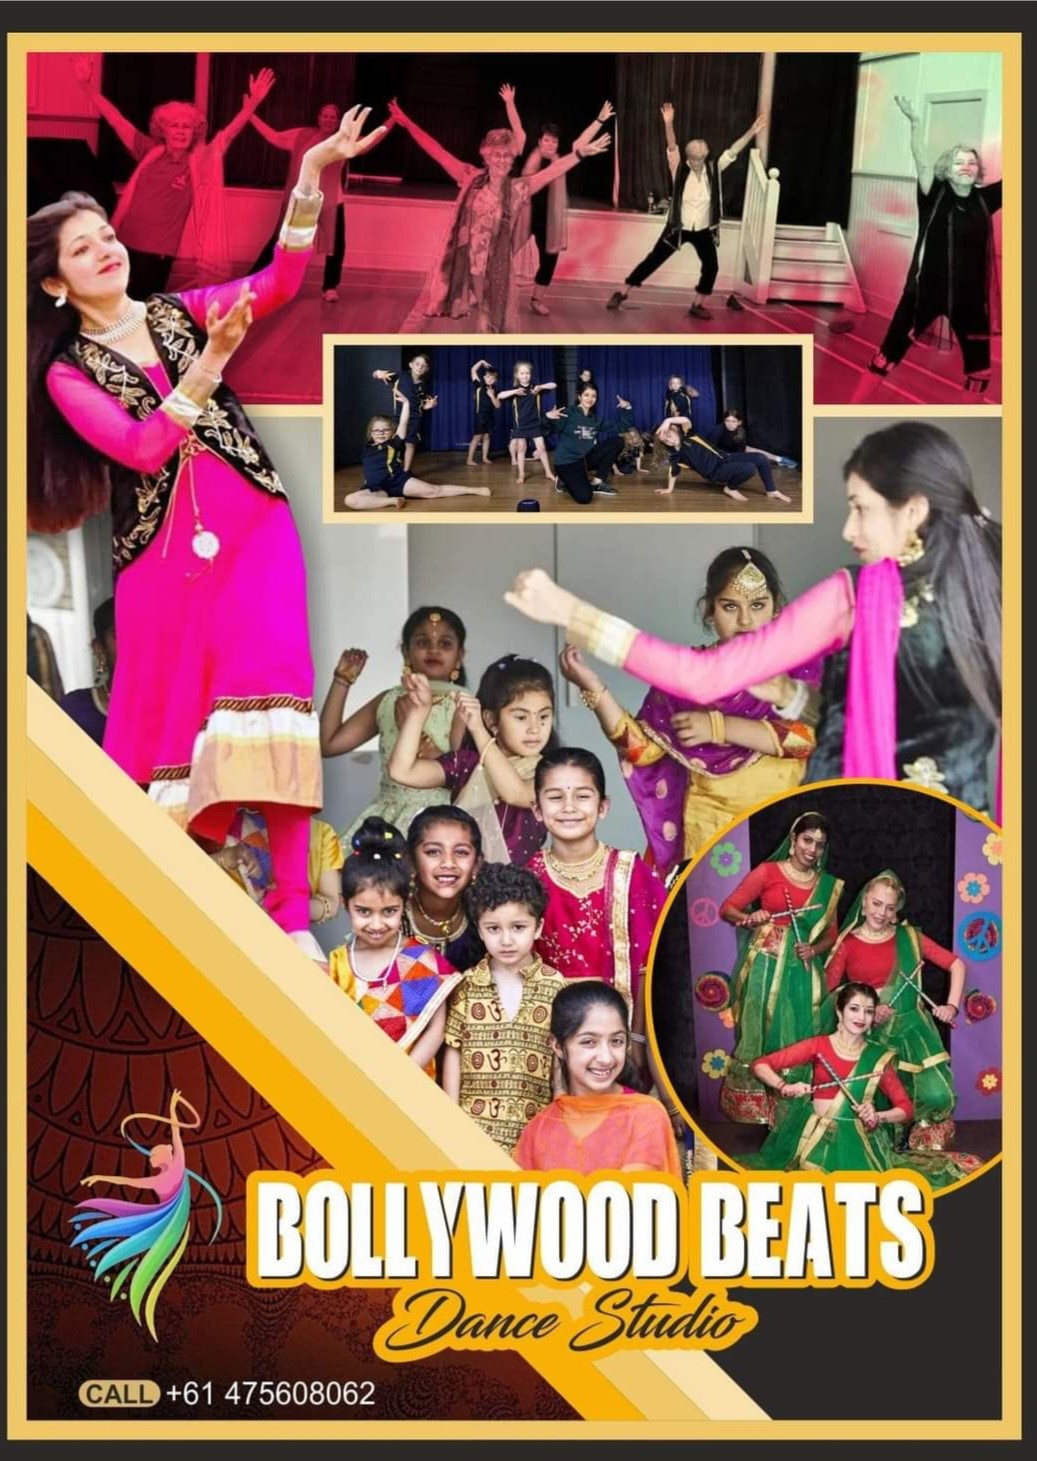 Bollywood Beats Dance Studio, call 0475608062